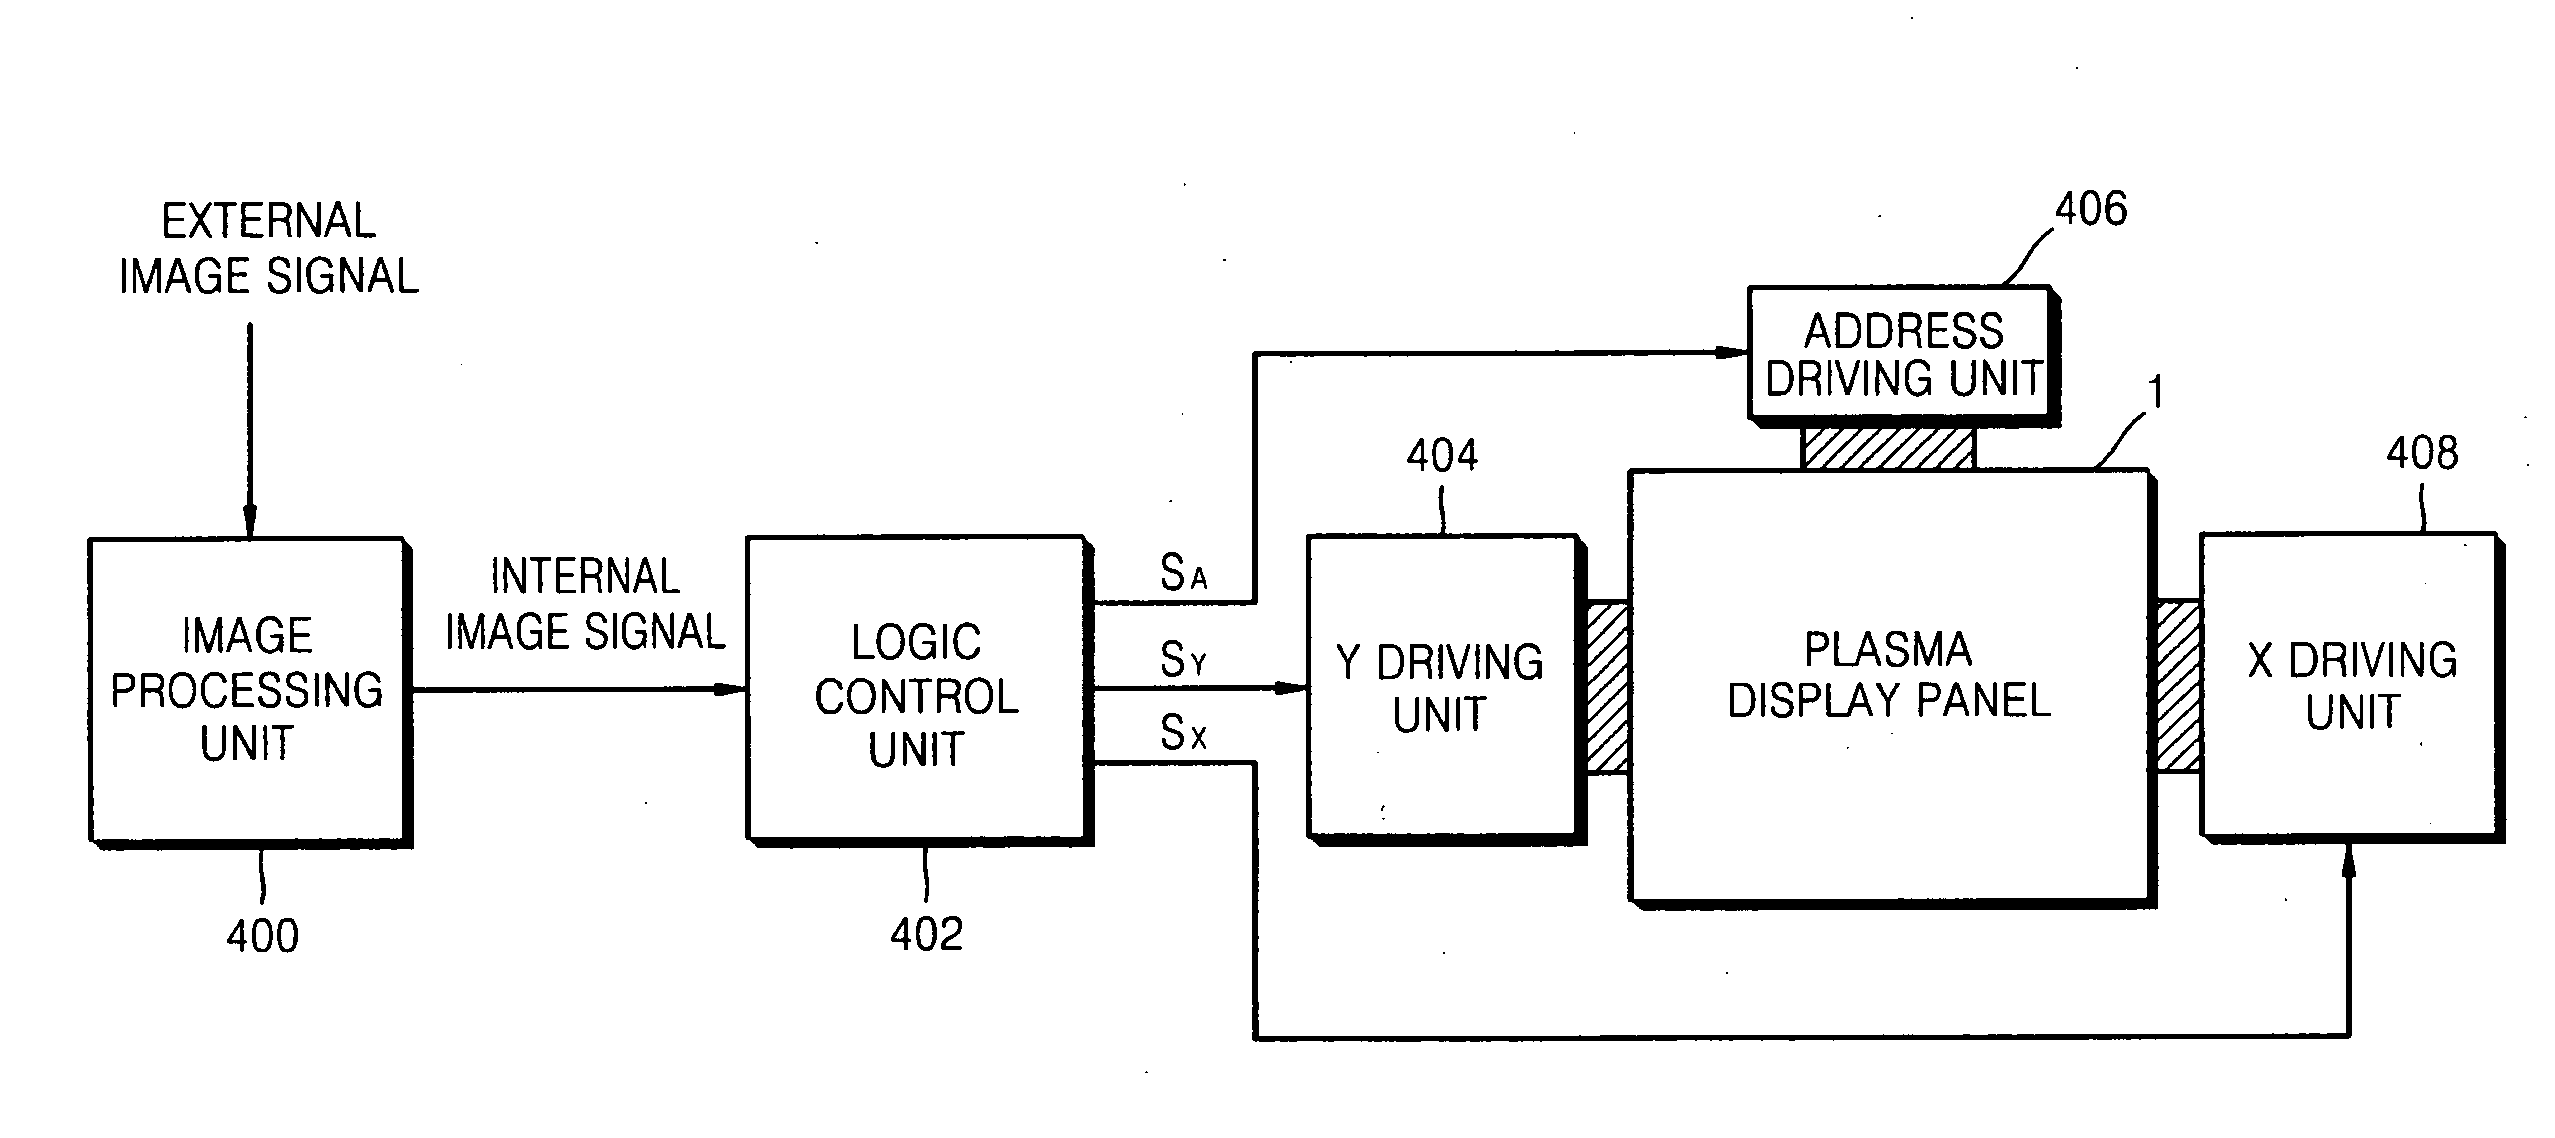 Method and apparatus to drive plasma display panel (PDP)